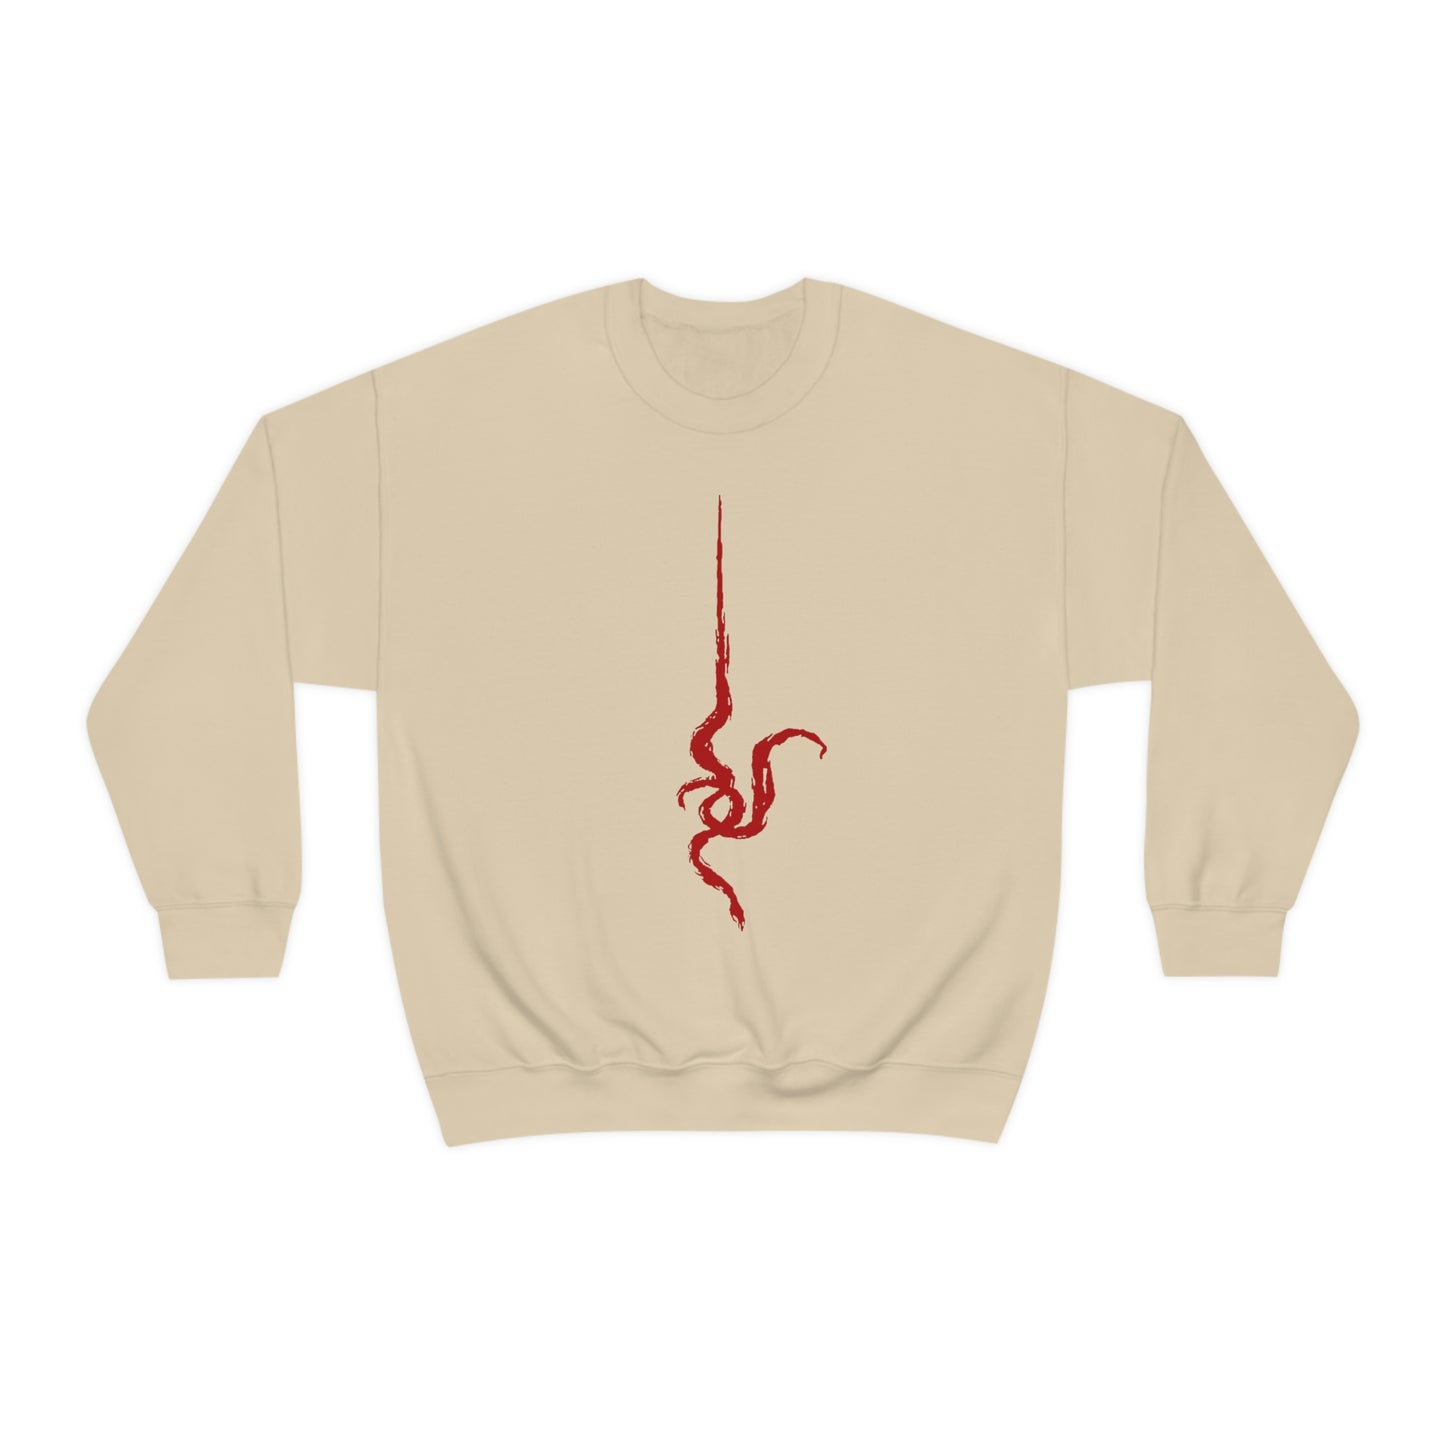 Nagito Komaedas Symbol Sweatshirt Vintage Inspired Sweater shirt